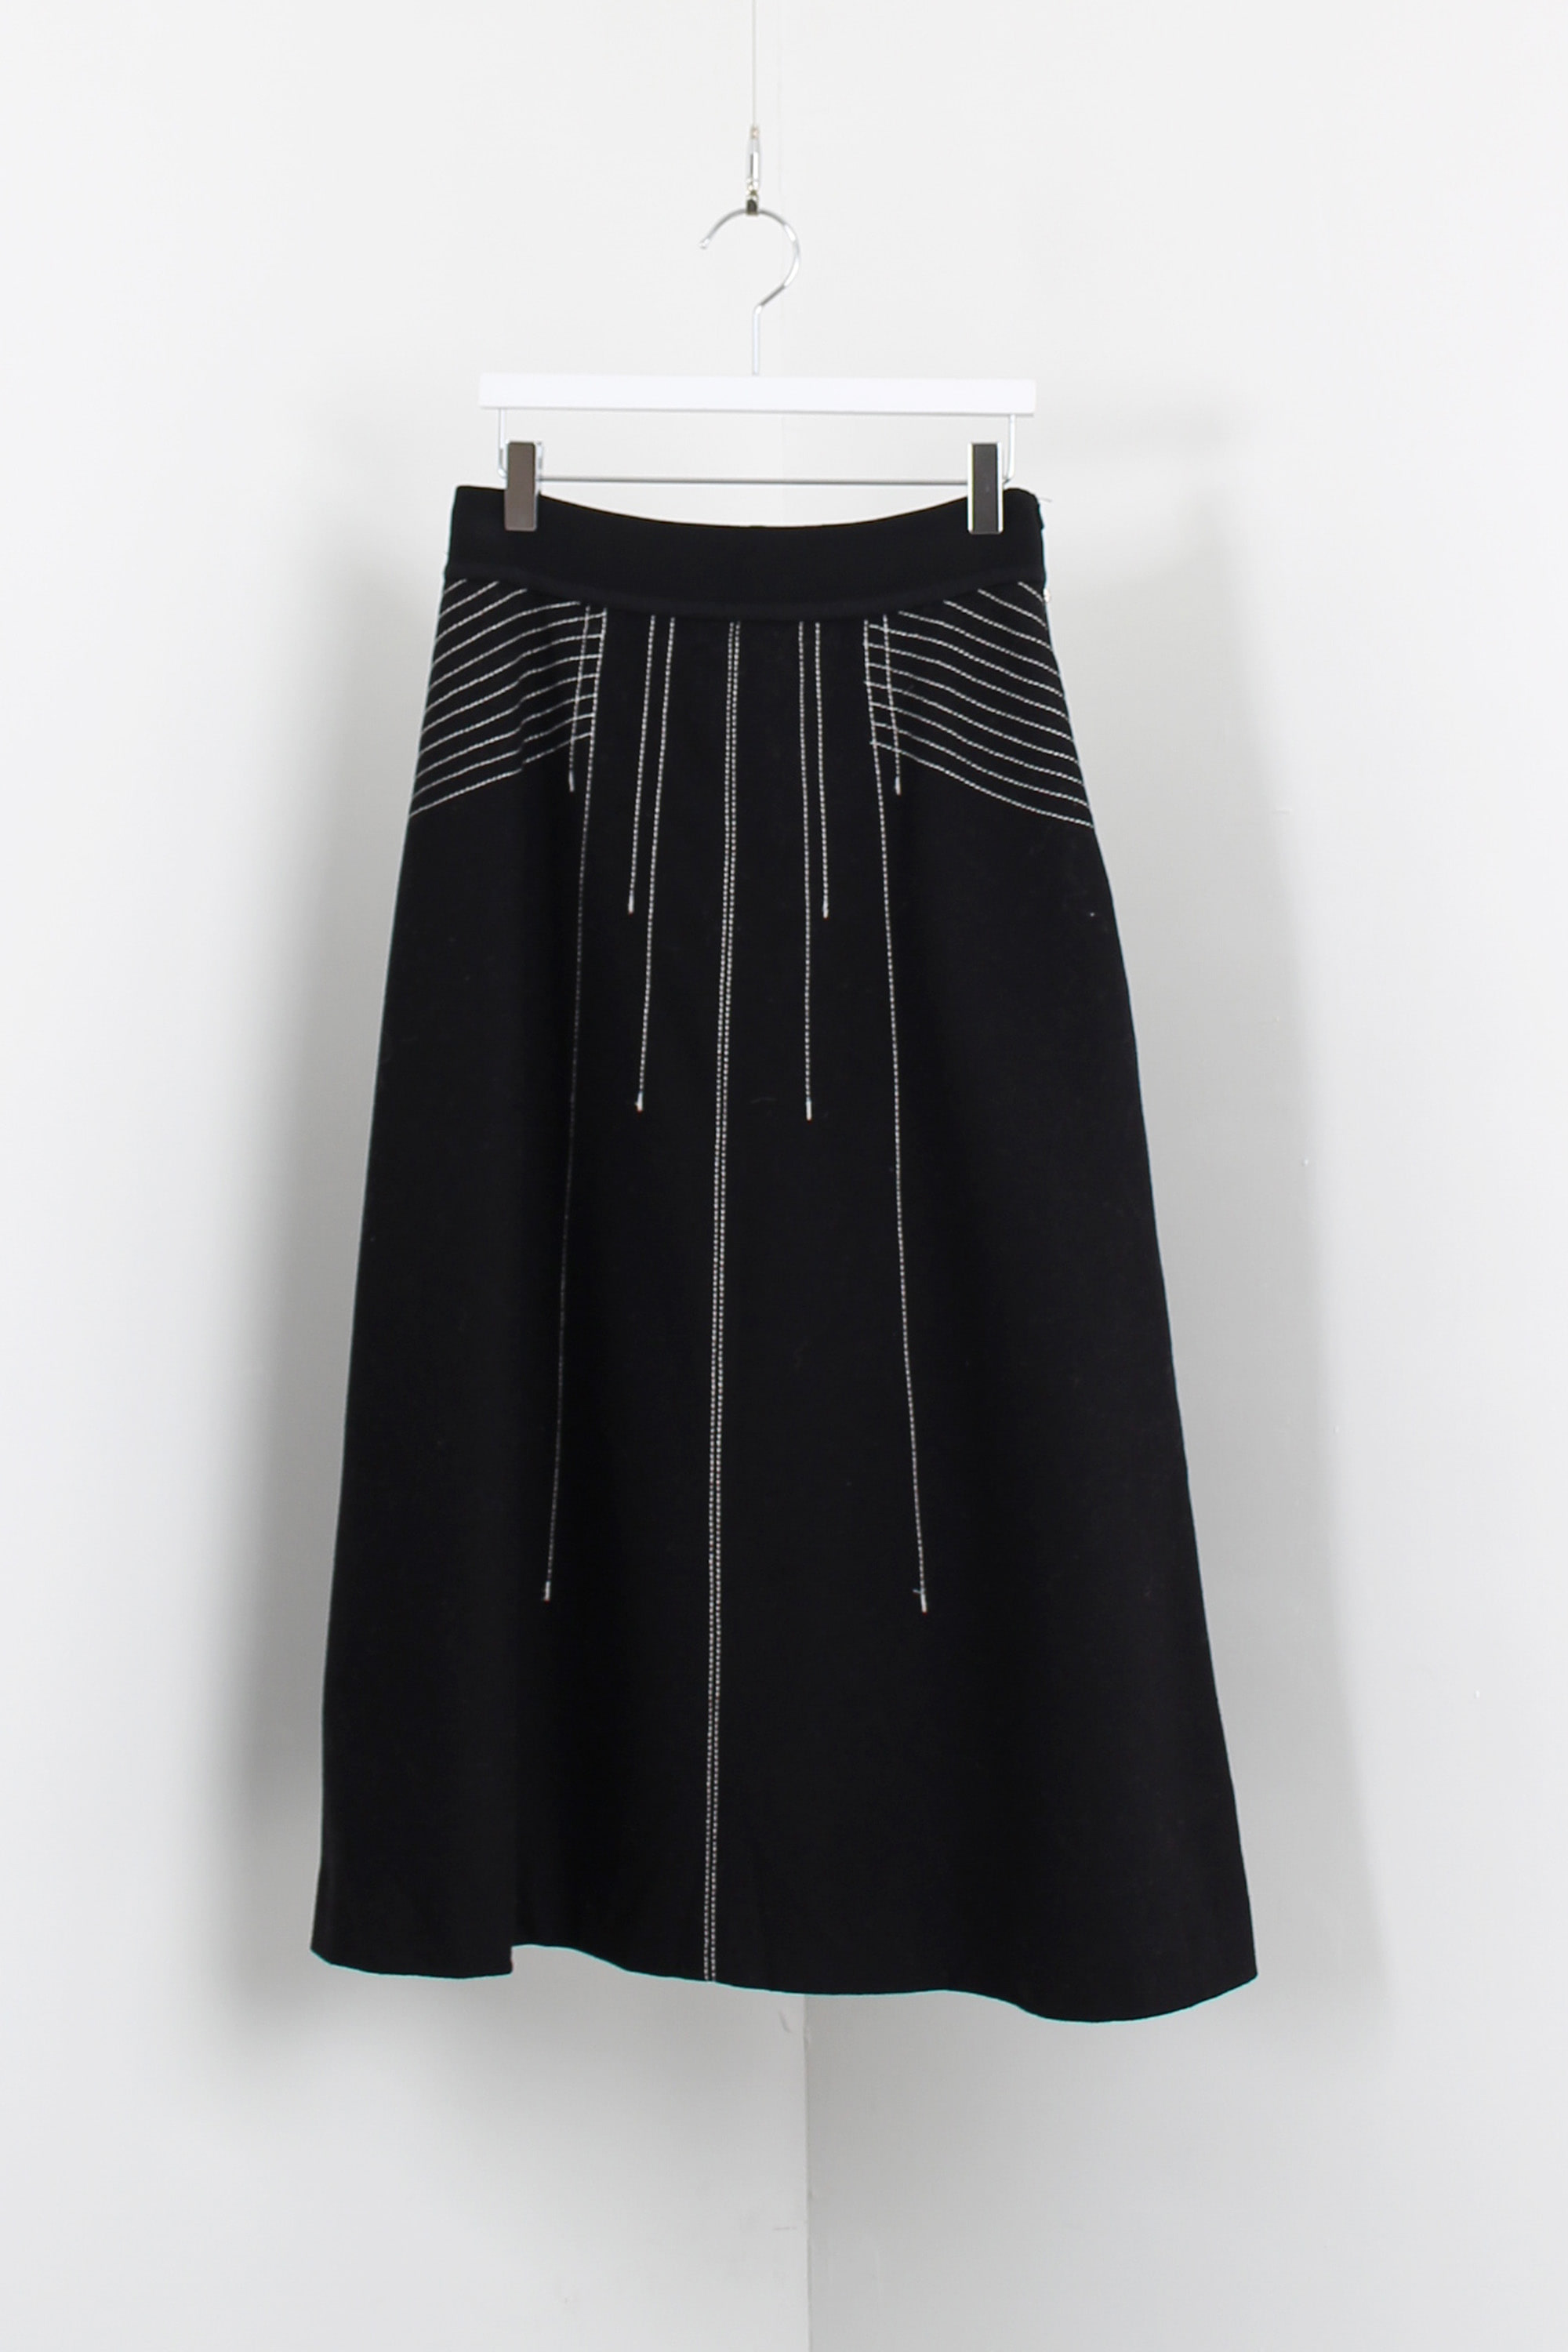 SPORTMAX CODE wool skirt